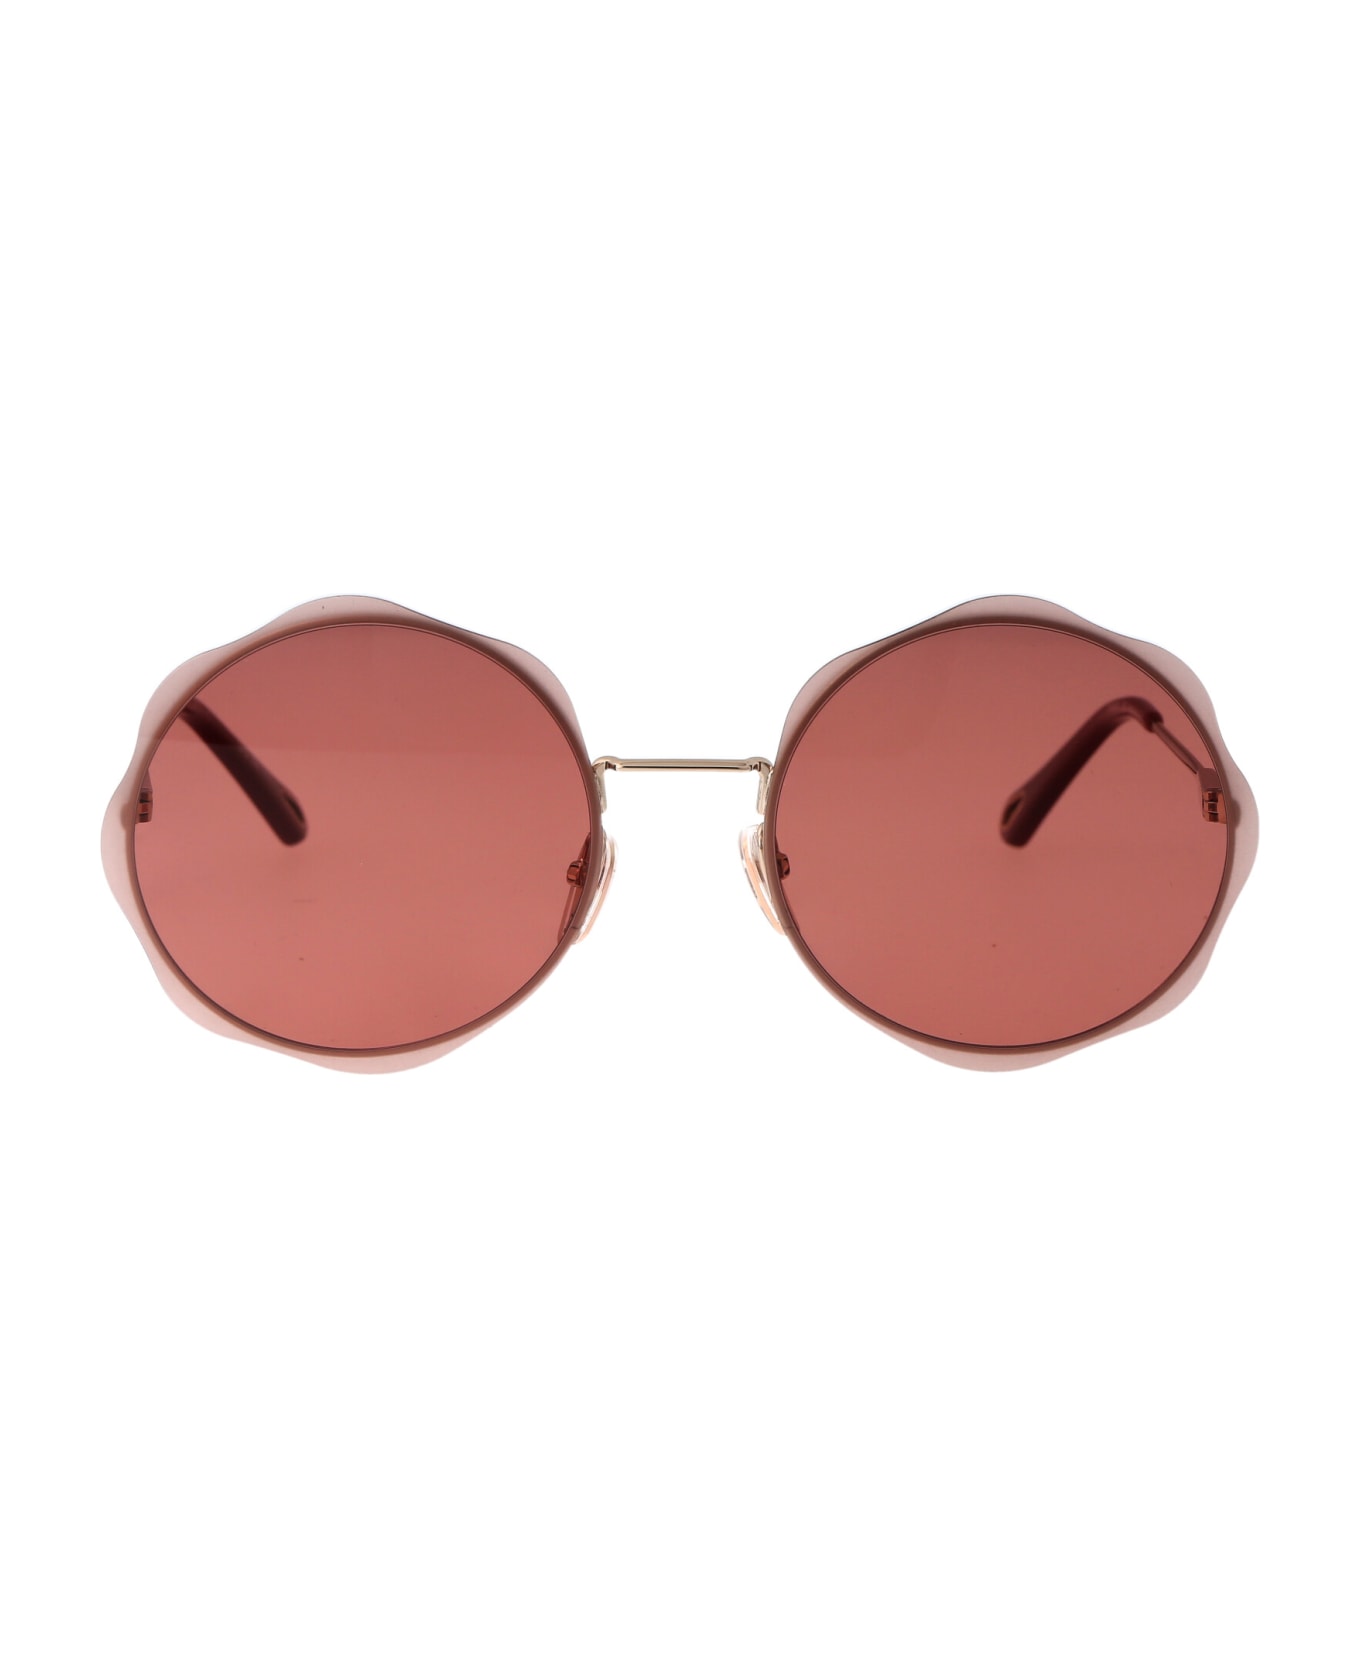 Chloé Eyewear Ch0202s Sunglasses - 003 GOLD GOLD RED